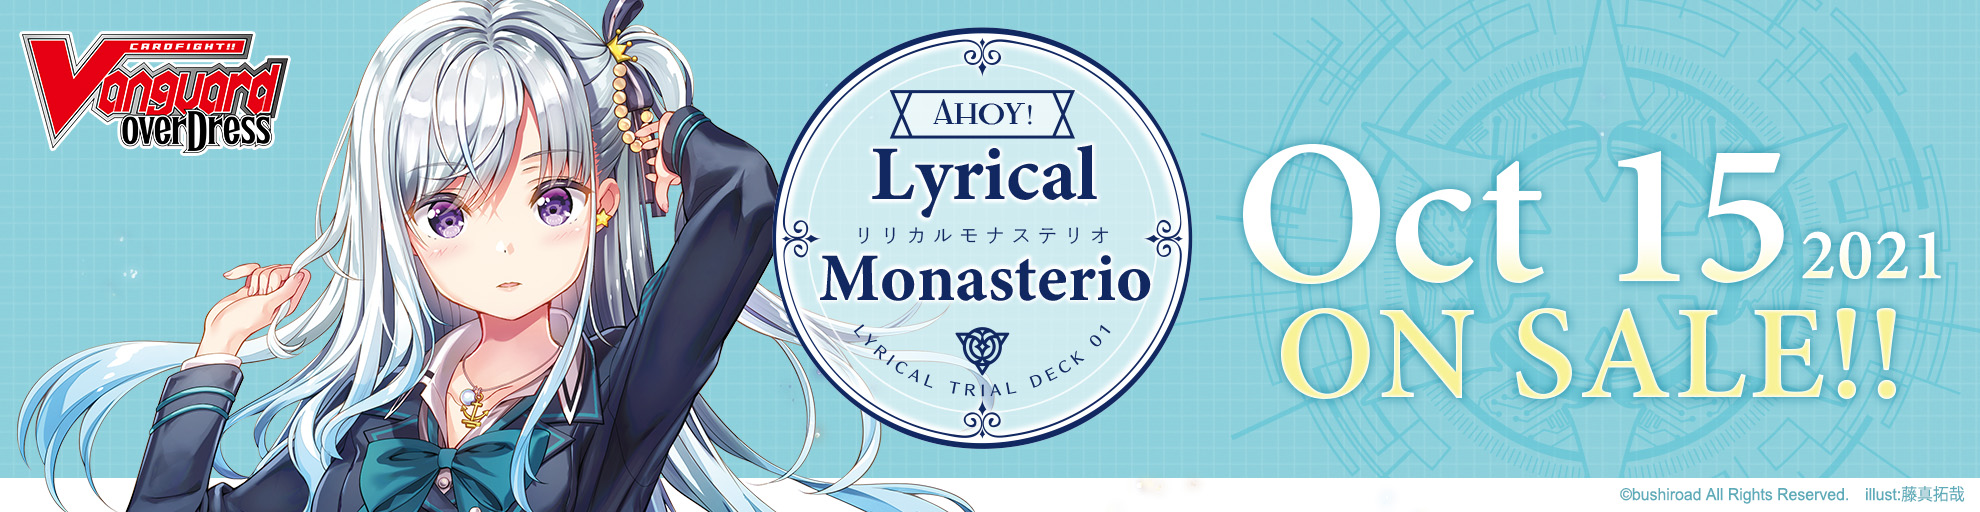 Lyrical Monesterio DLT01 Top Banner